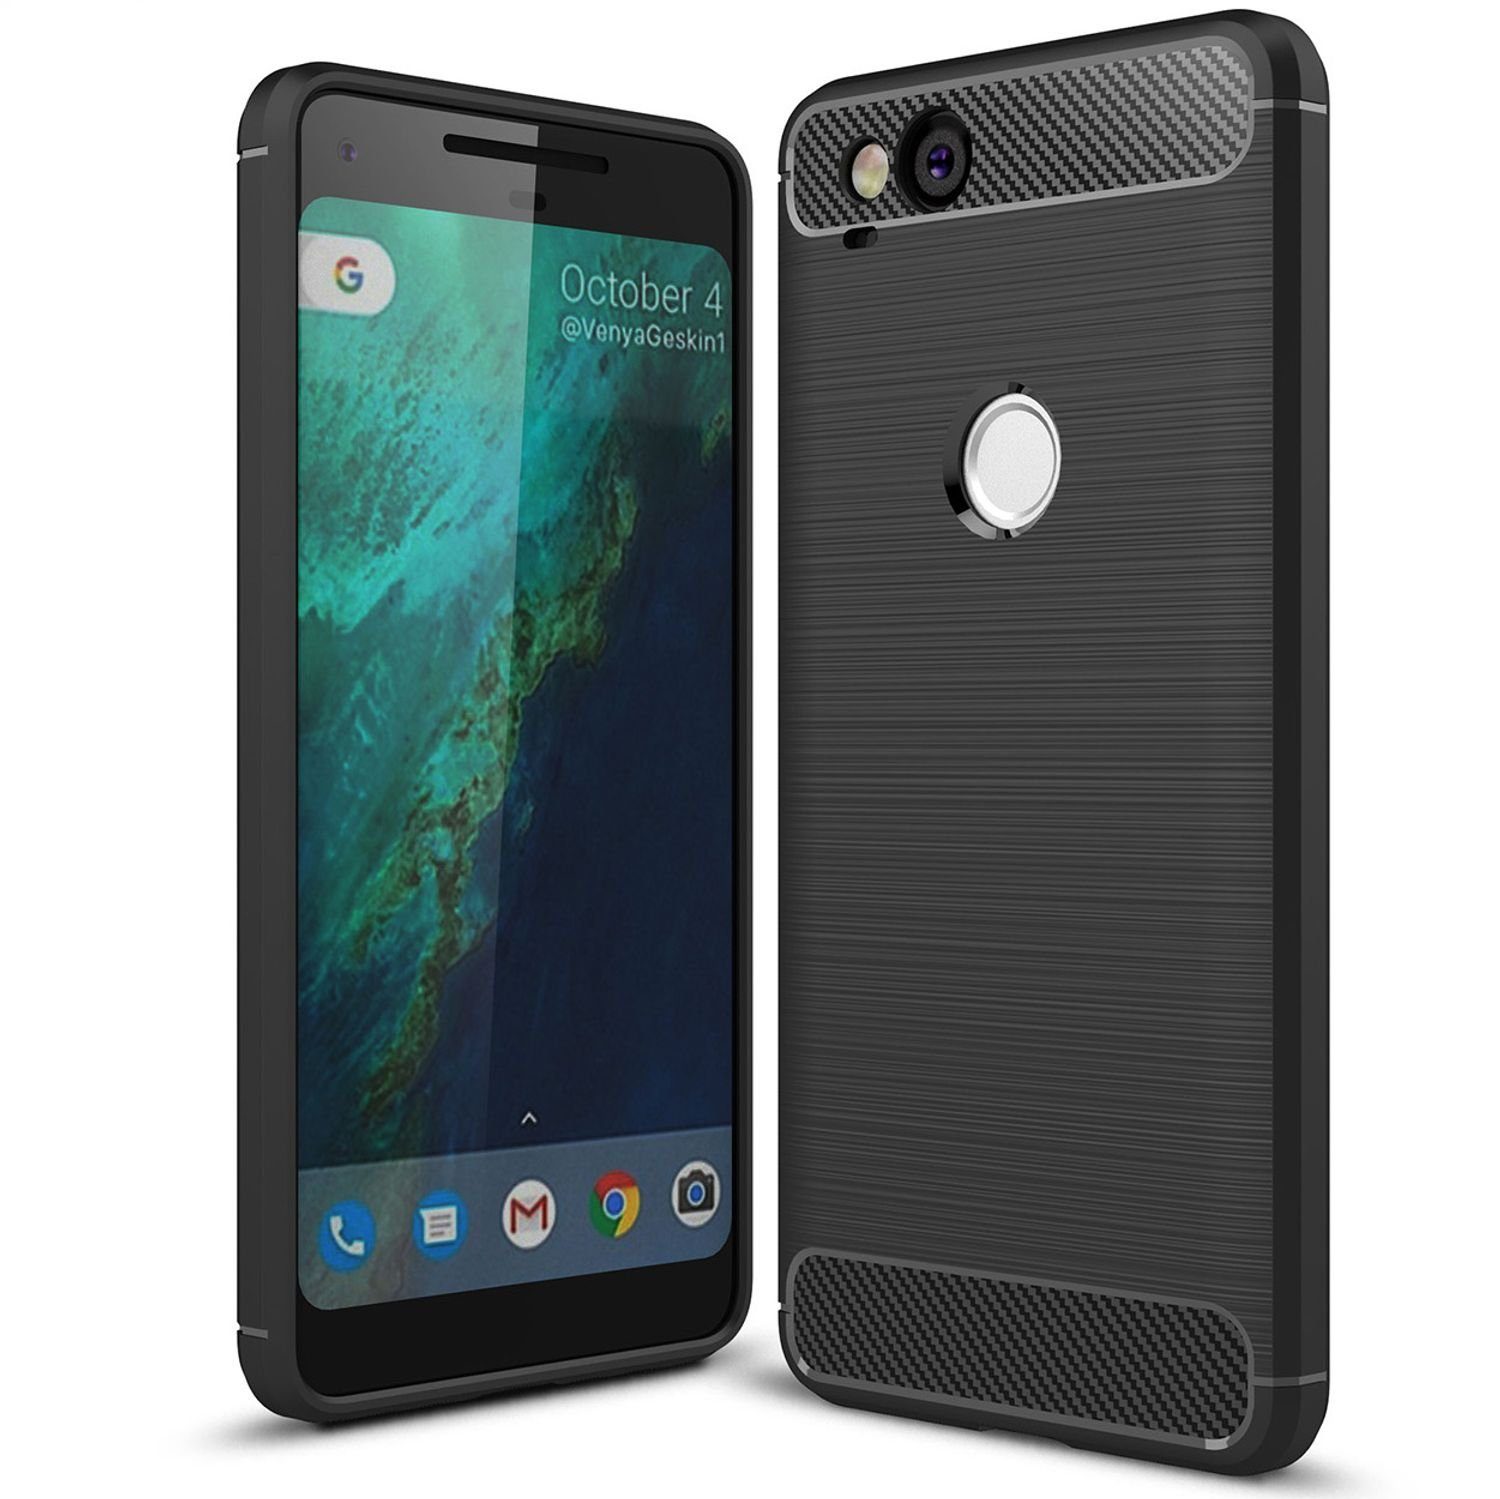 Nalia Smartphone-Hülle Google Pixel 2, Carbon Look Silikon Hülle / Matt Schwarz / Rutschfest / Karbon Optik